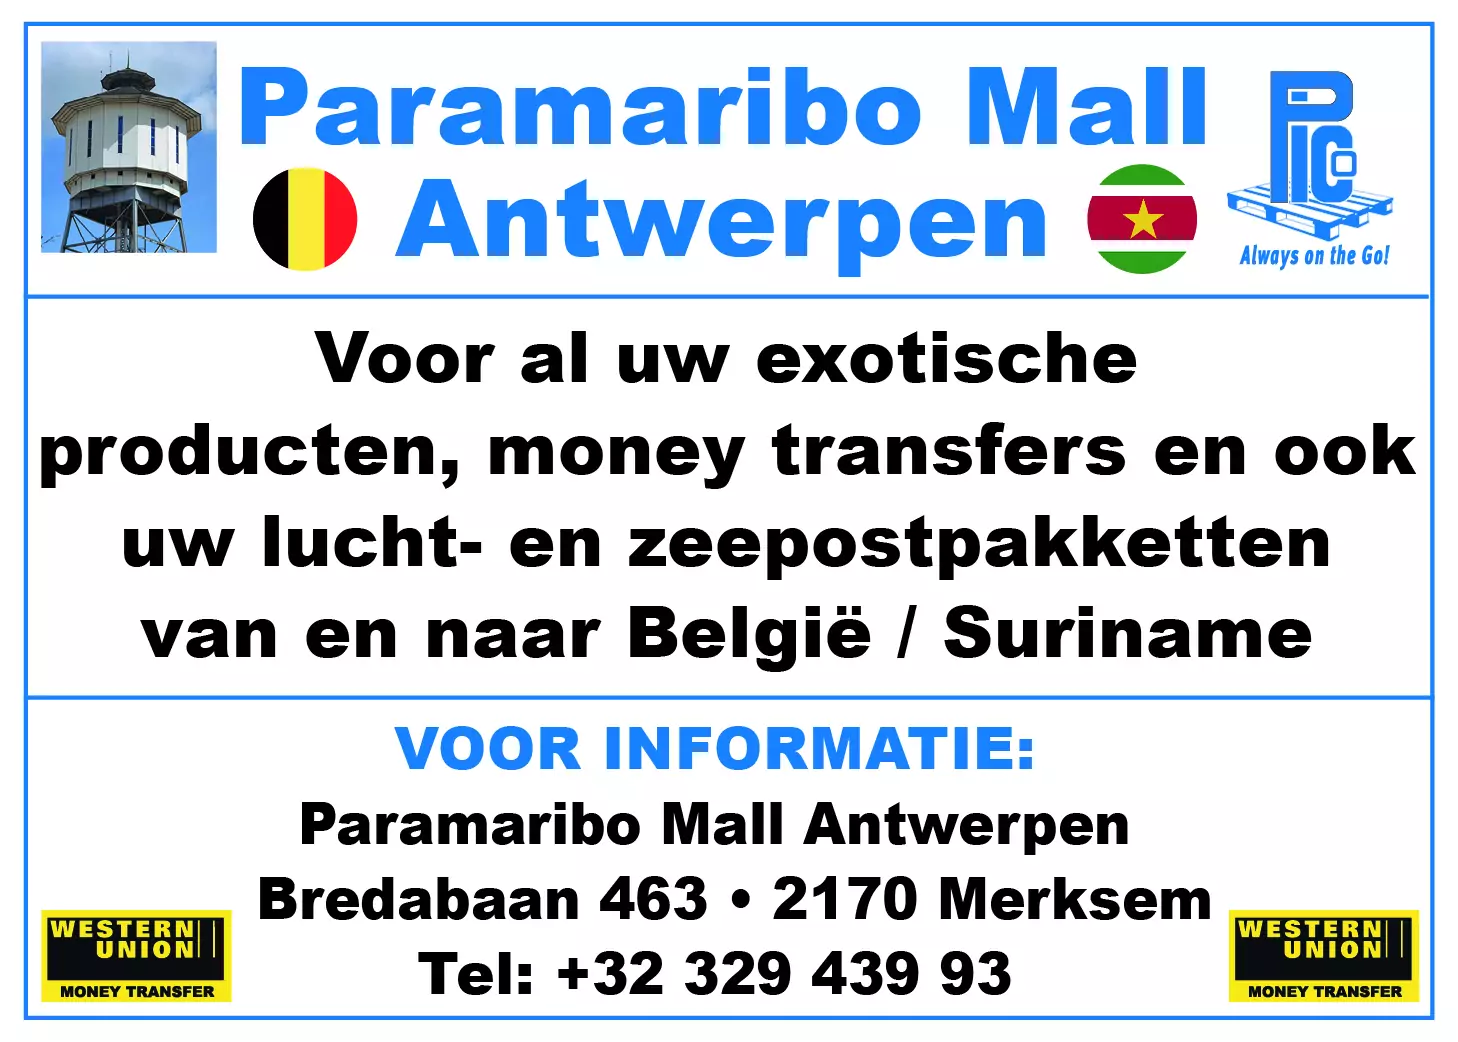 starnews-paramaribo-mall-antwerp-65e8235b0c0fb